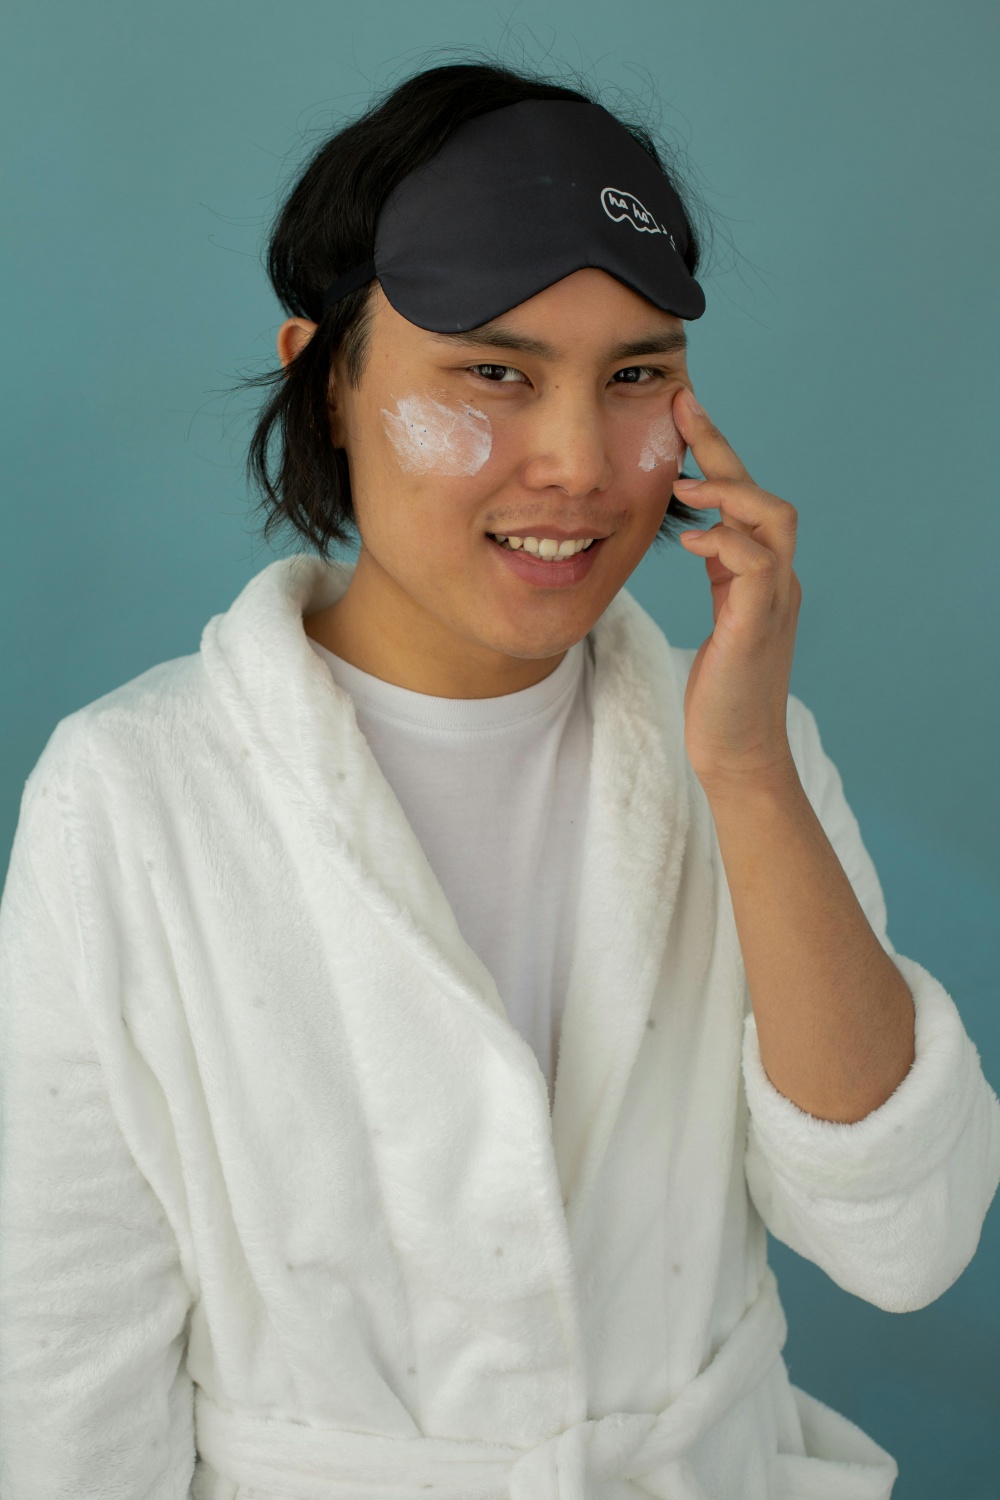 man with eye mask applying Moisturizers